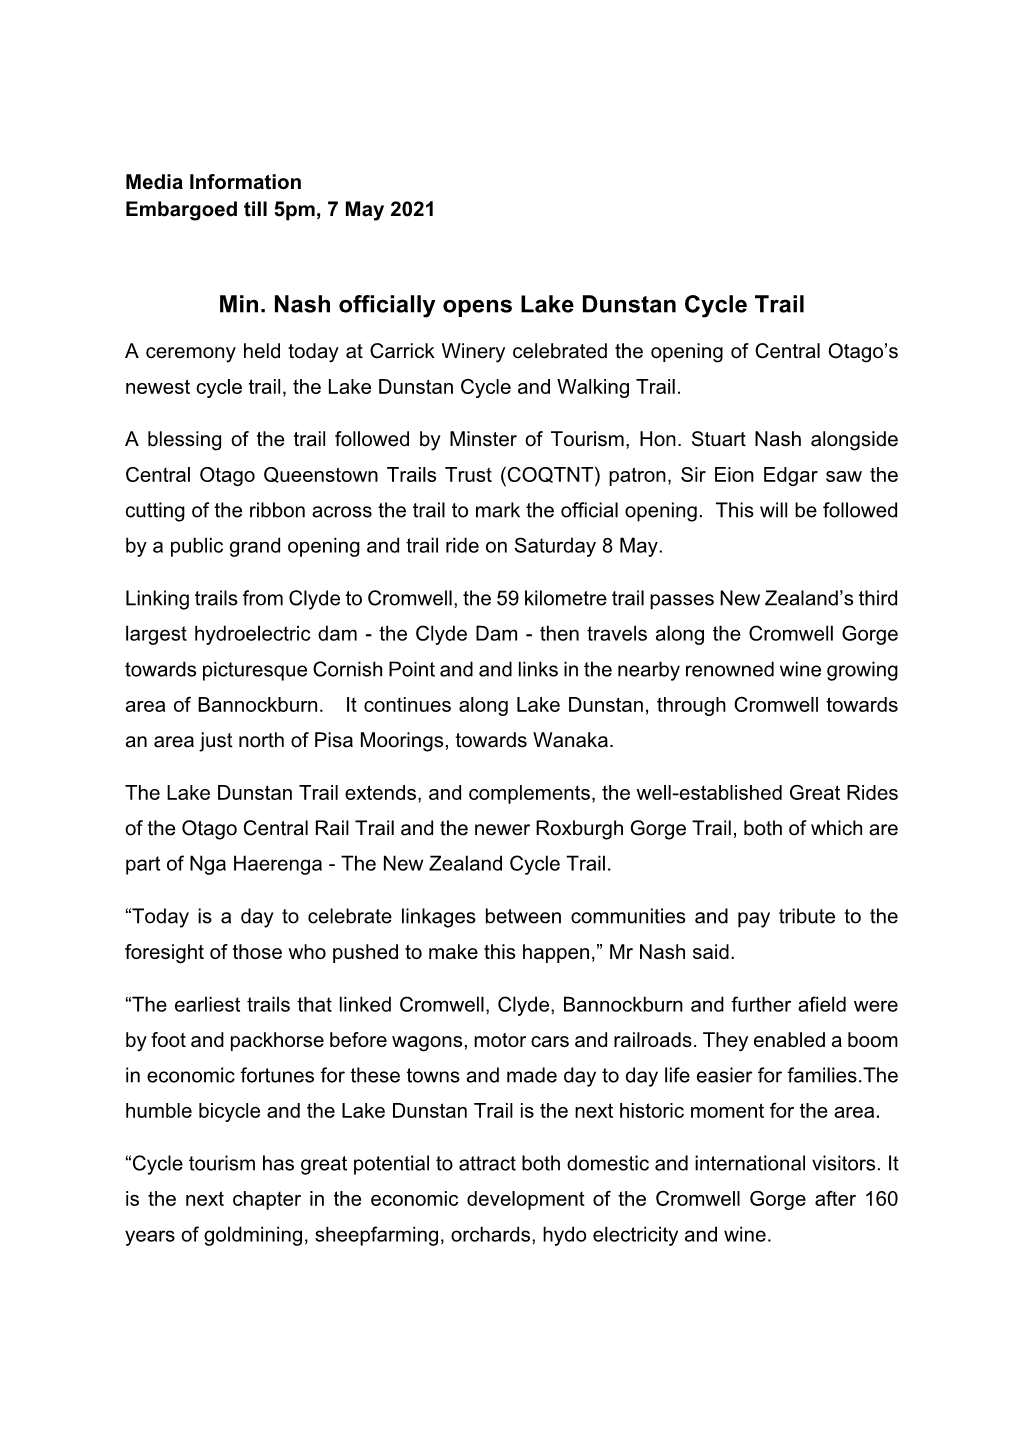 Media Release Min Nash Officially Opens Lake Dunstan Trail FINAL